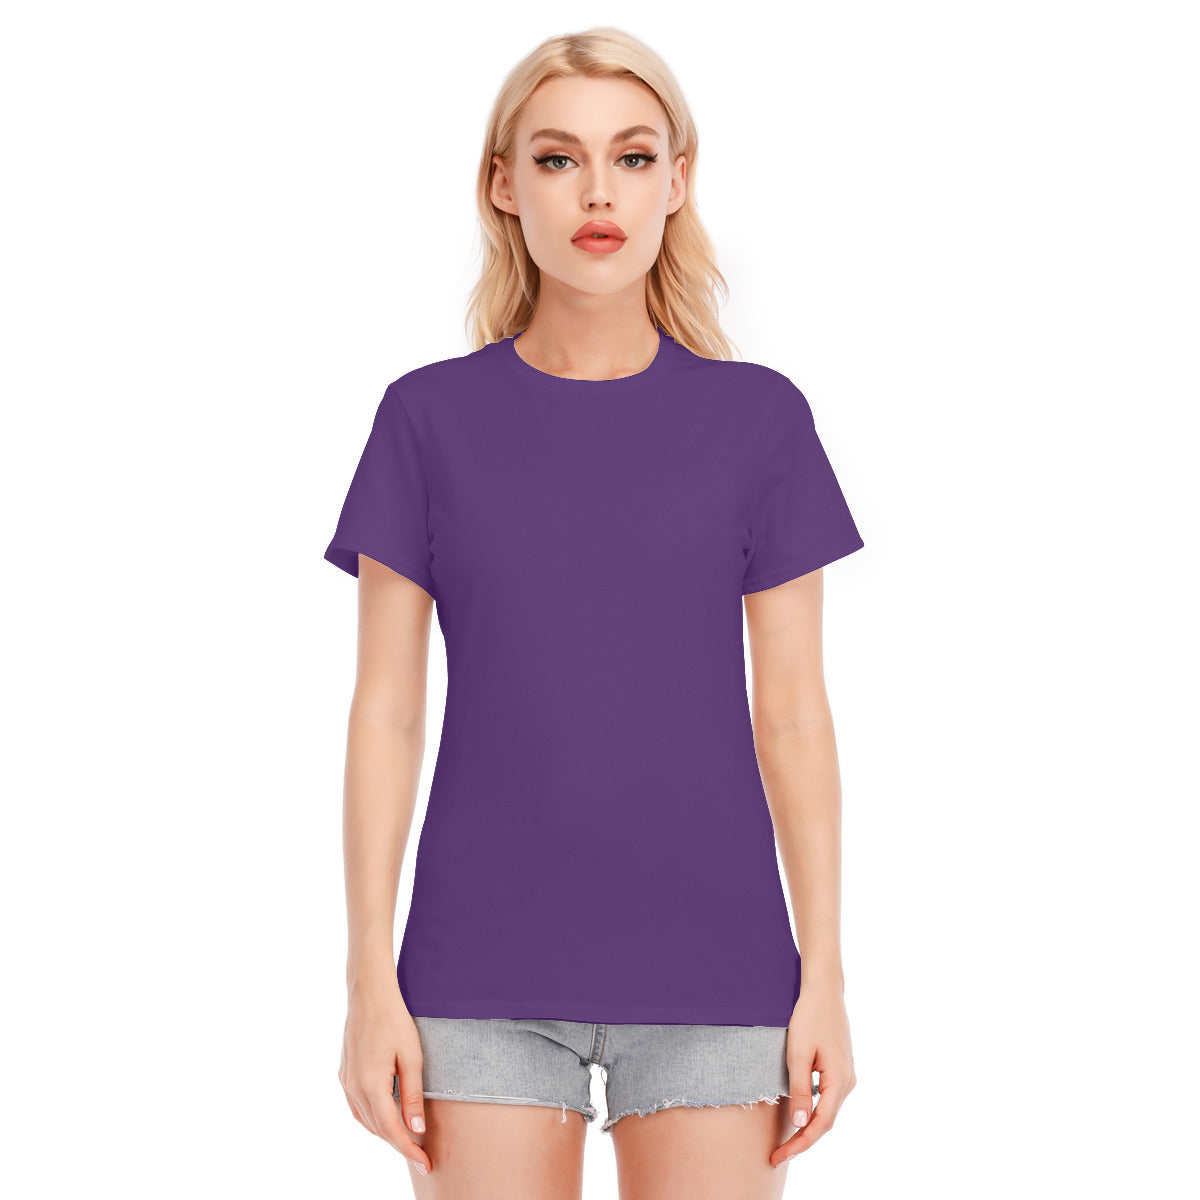 Fantasy 146a -- Unisex O-neck Short Sleeve T-shirt